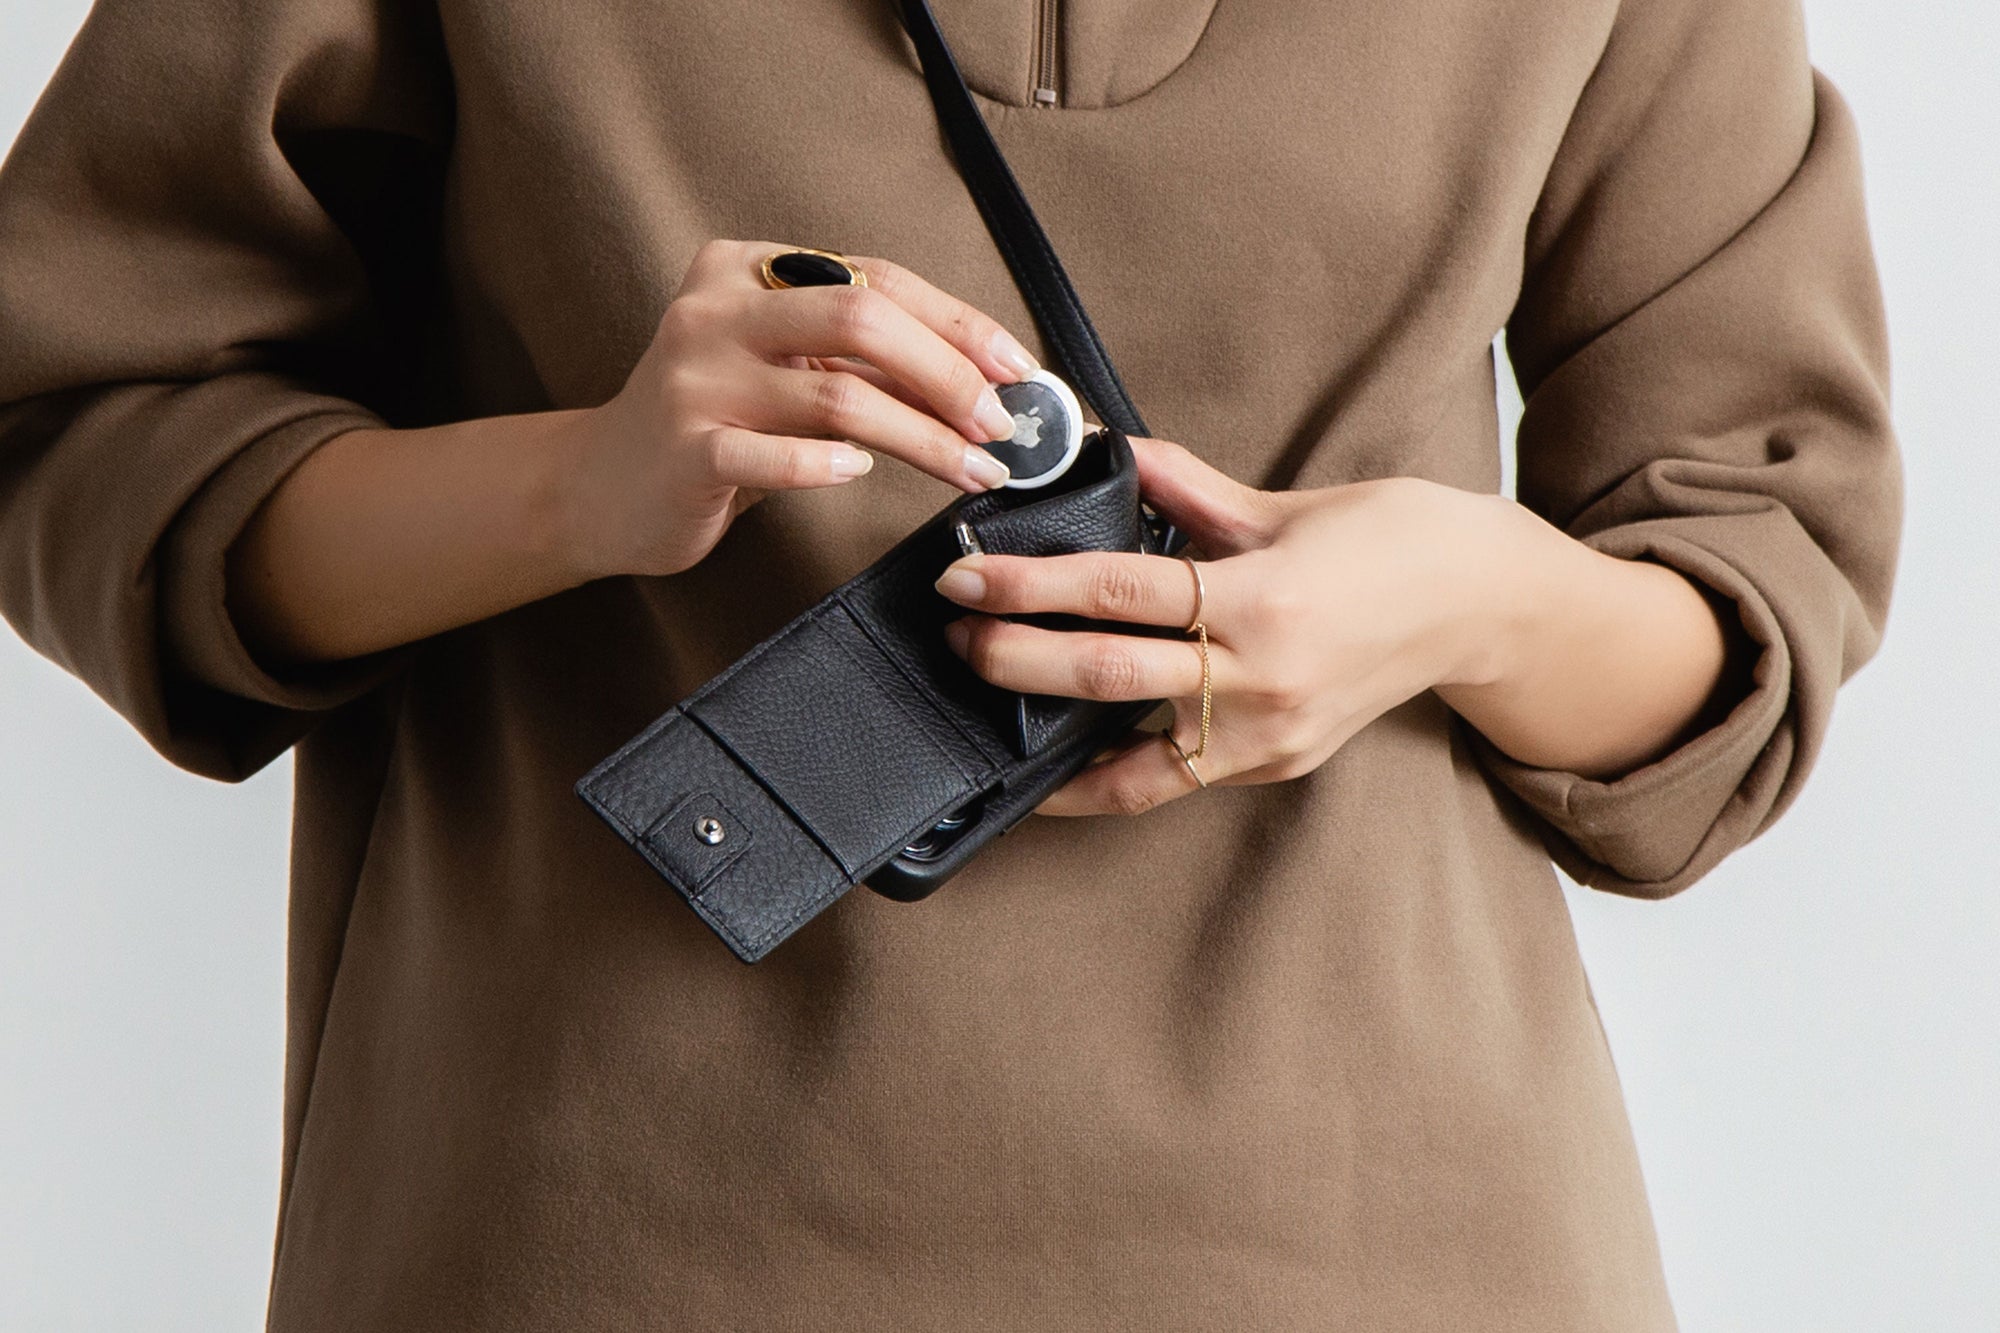 Magsafe iPhone Case + Crossbody Accessories Set - Black